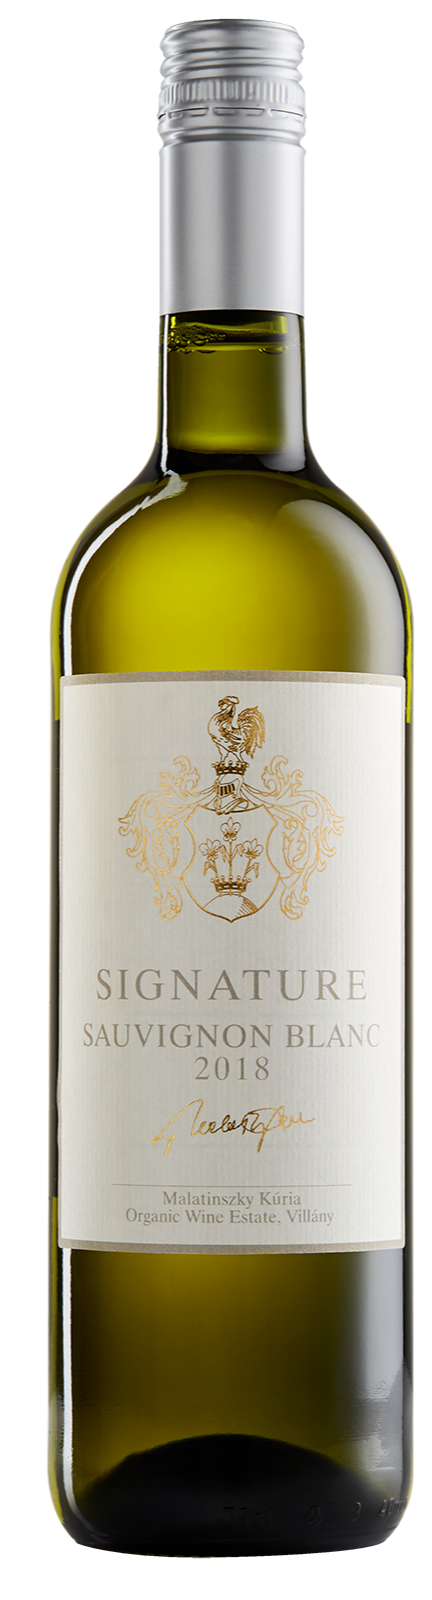 Signature Sauvignon Blanc